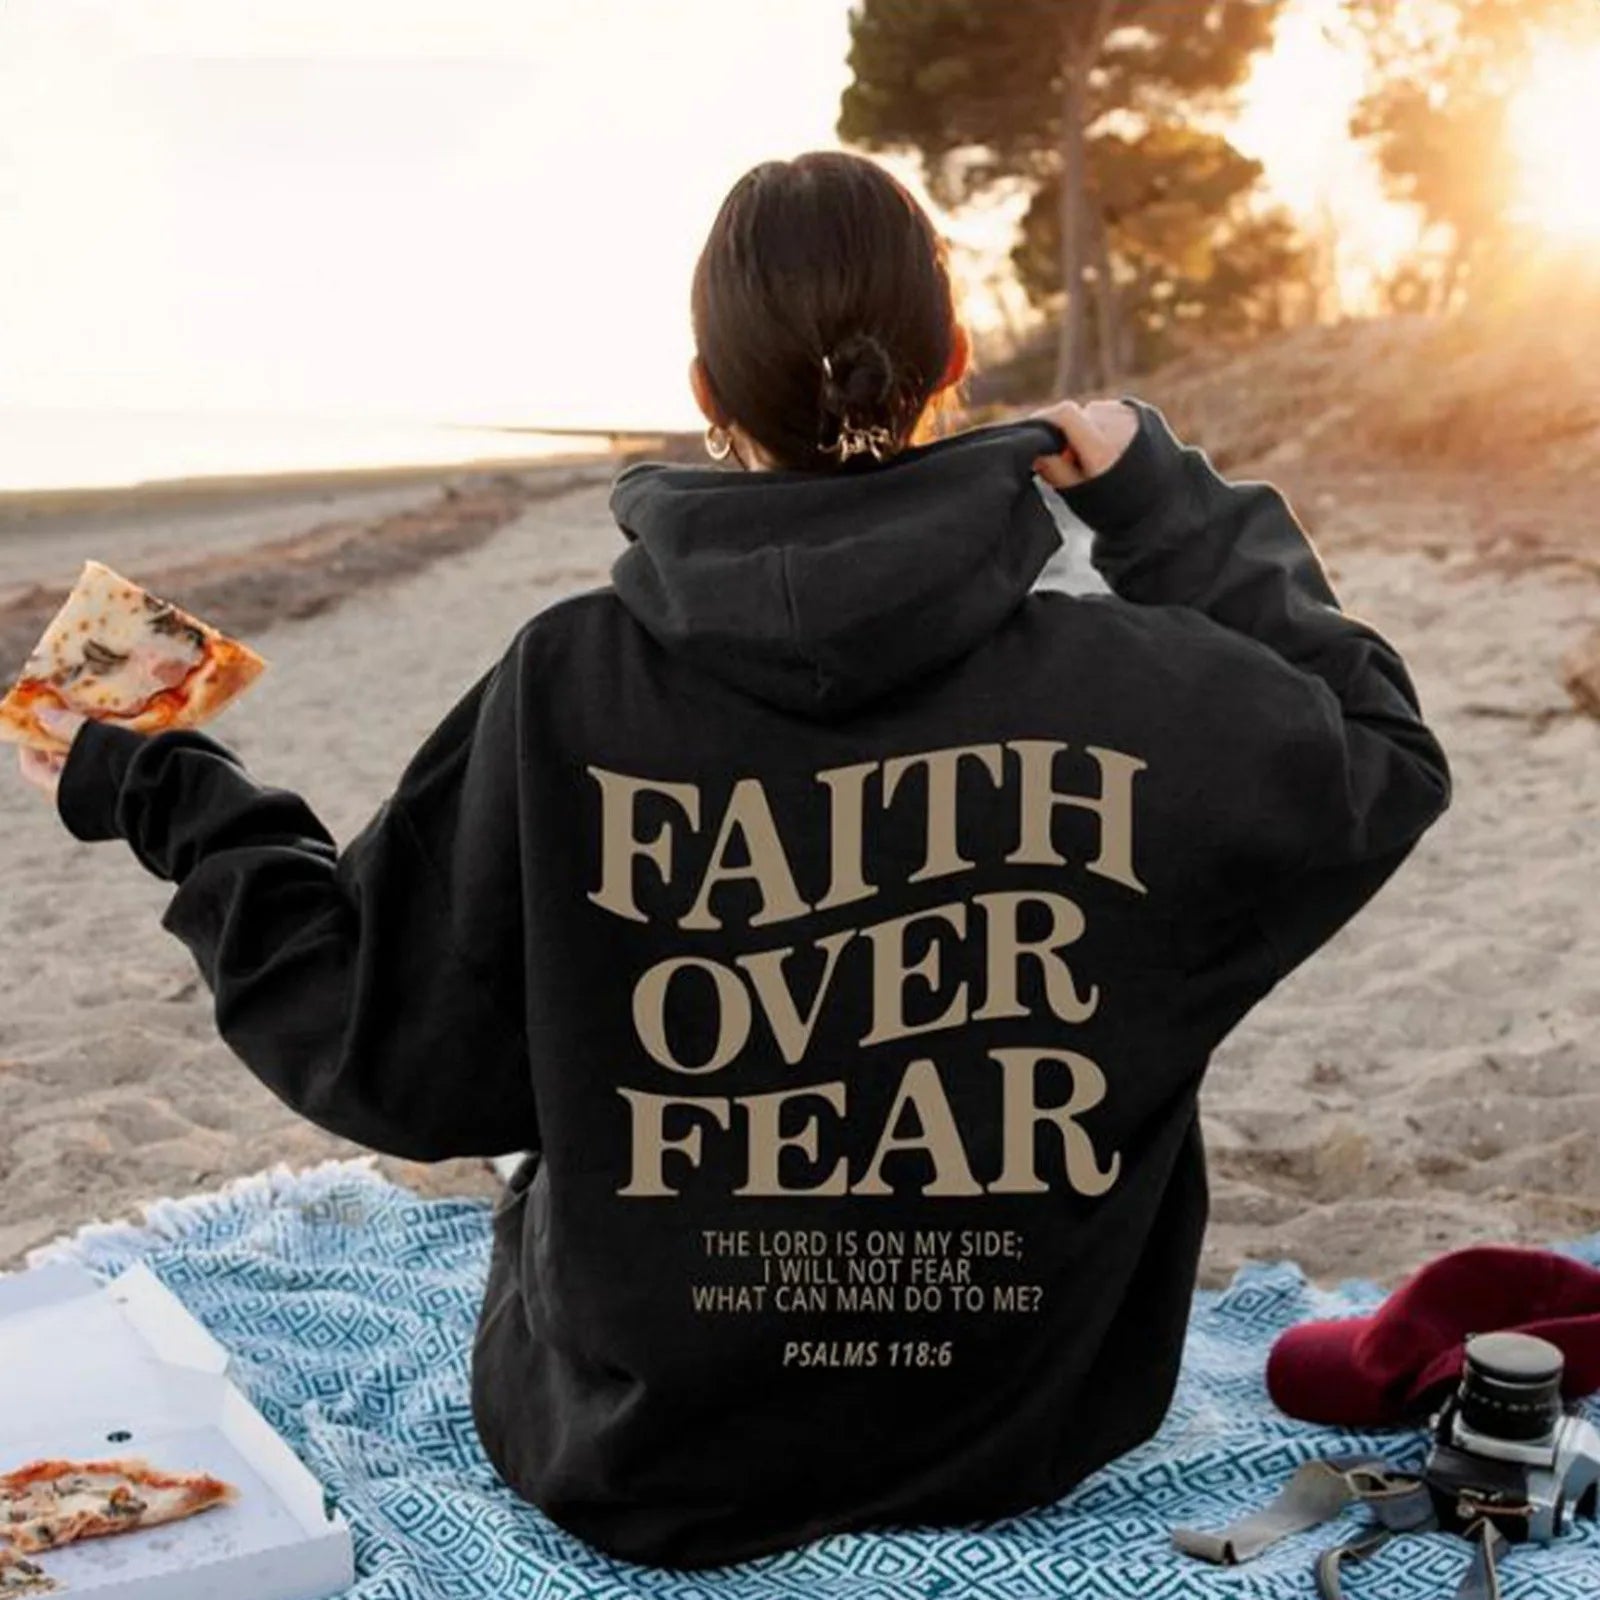 Faith Over Fear Oversized Women's Hoodie Sweatshirt: Trendy Graphic Hooded Sweatshirts for Autumn Casual Wear